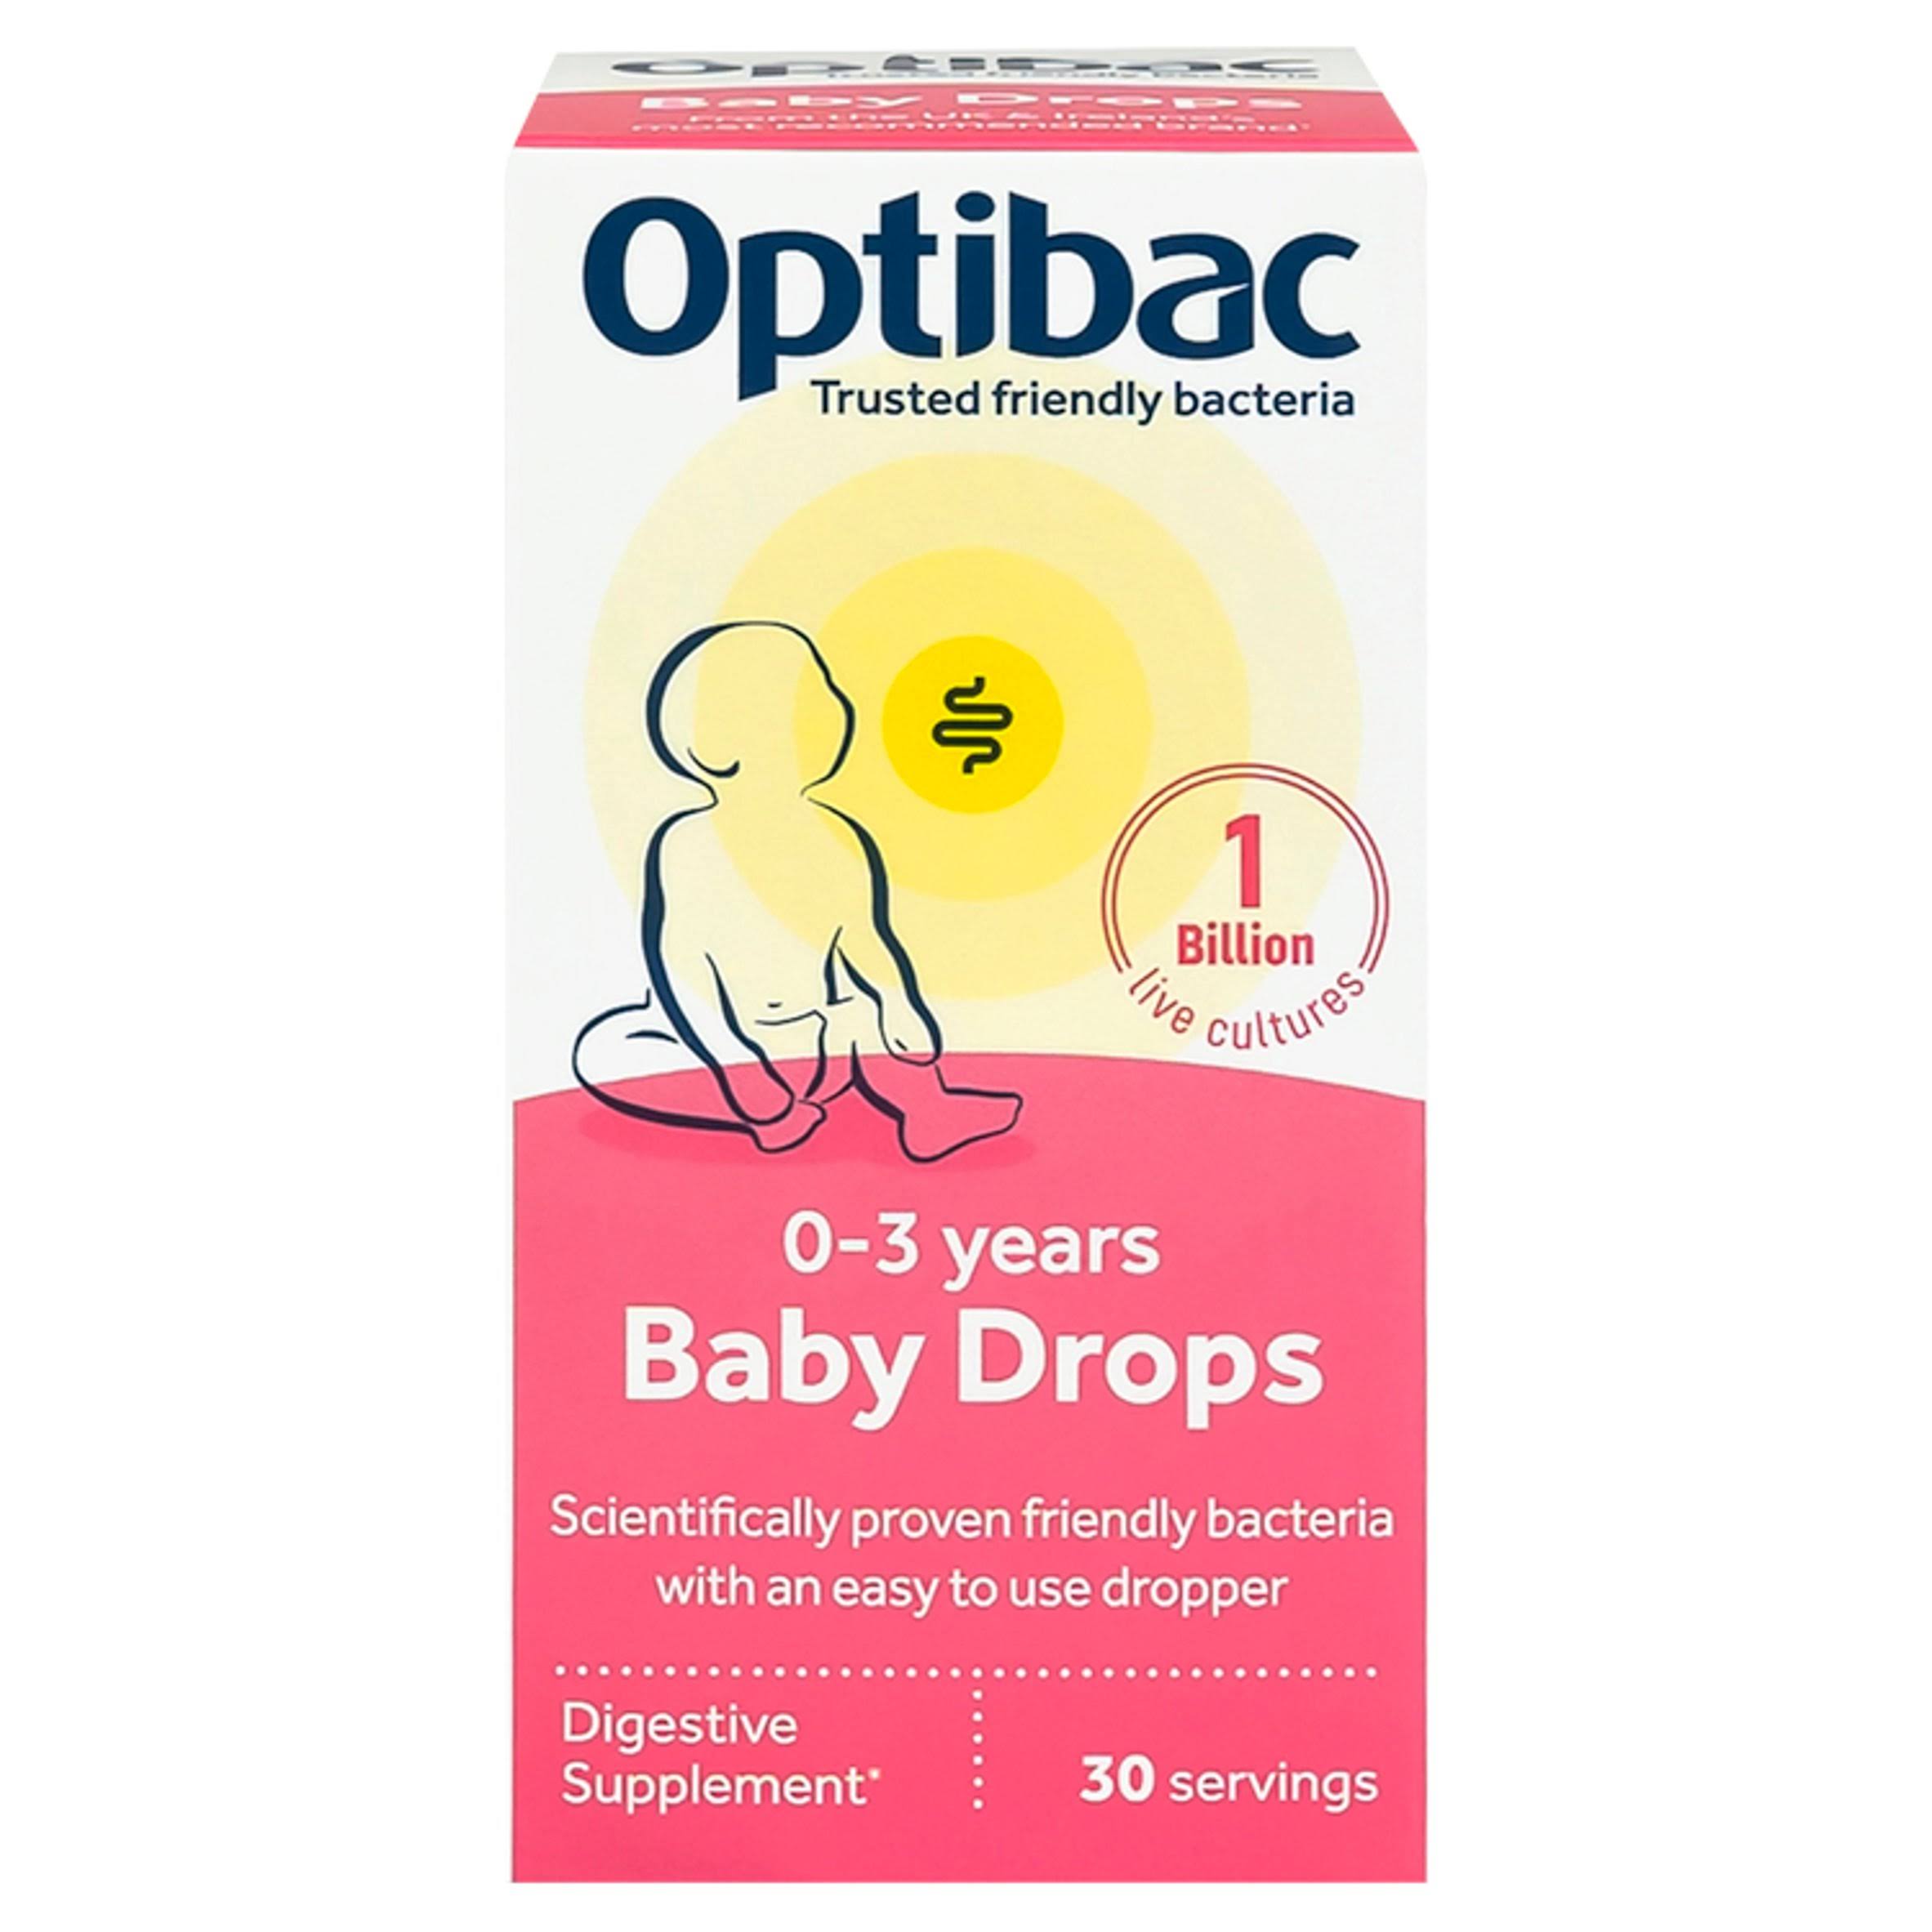 Optibac Probiotics for Babies Drops 0-3 Years 30